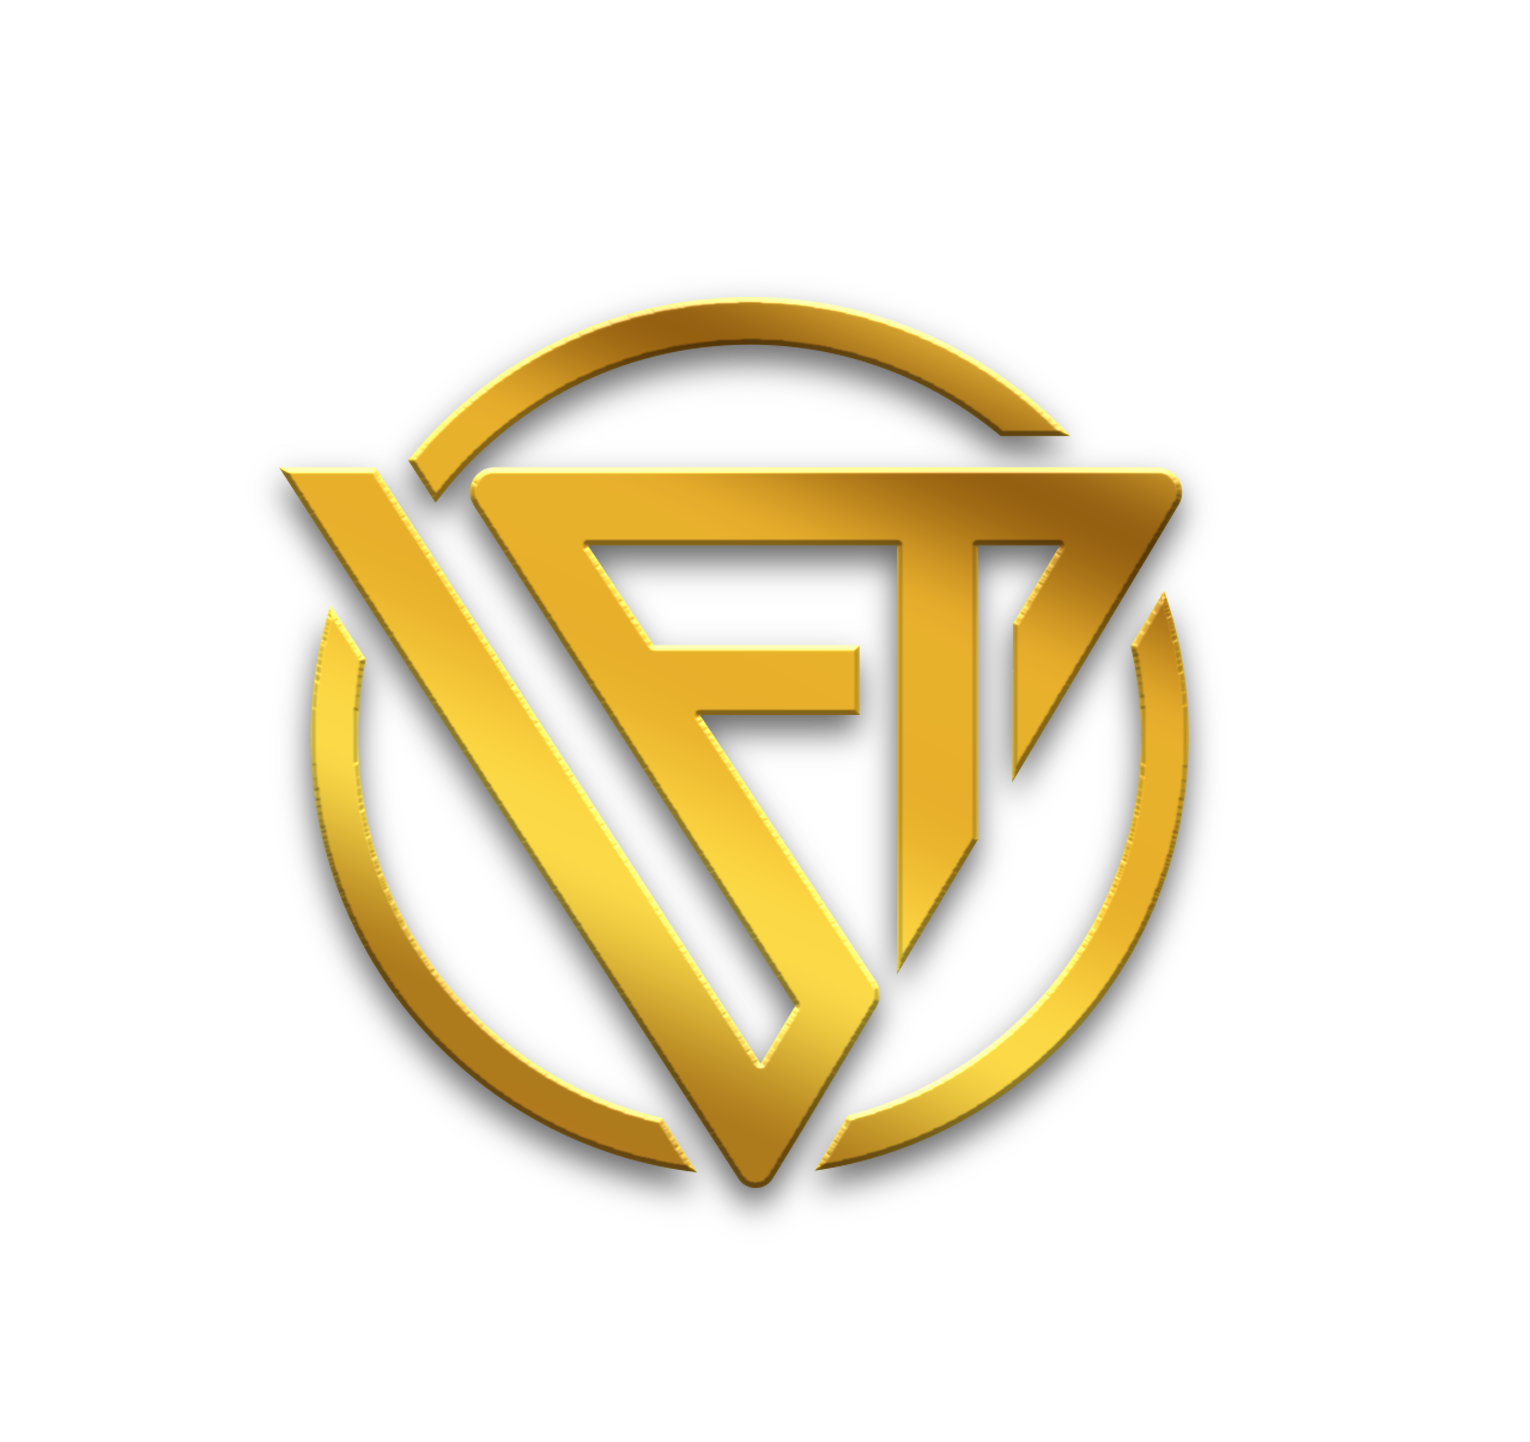 Value Finance logo